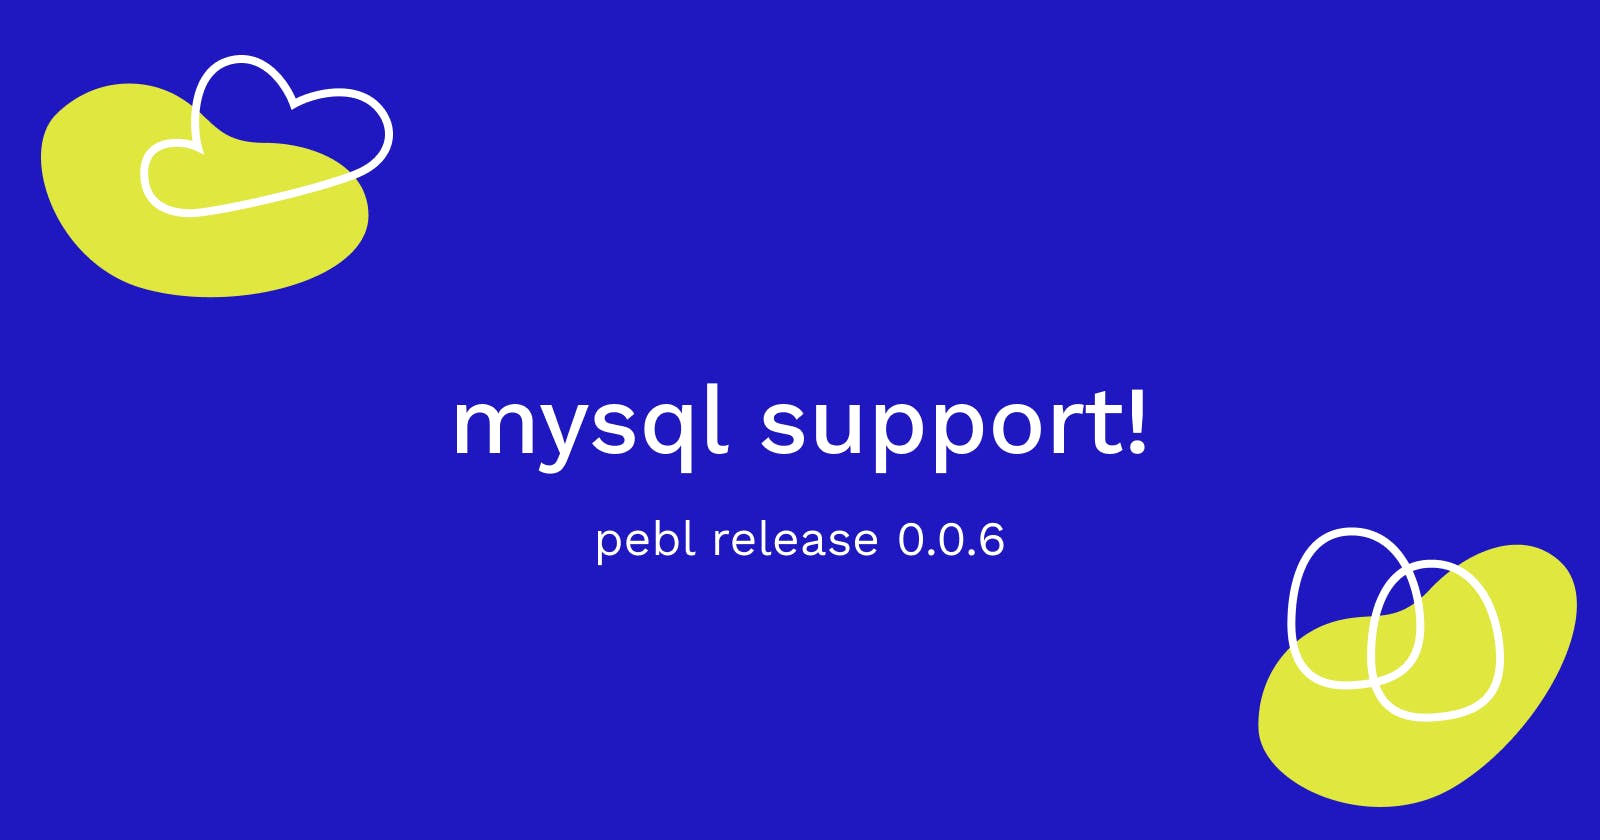 mysql support! — pebl supports mysql with release 0.0.6